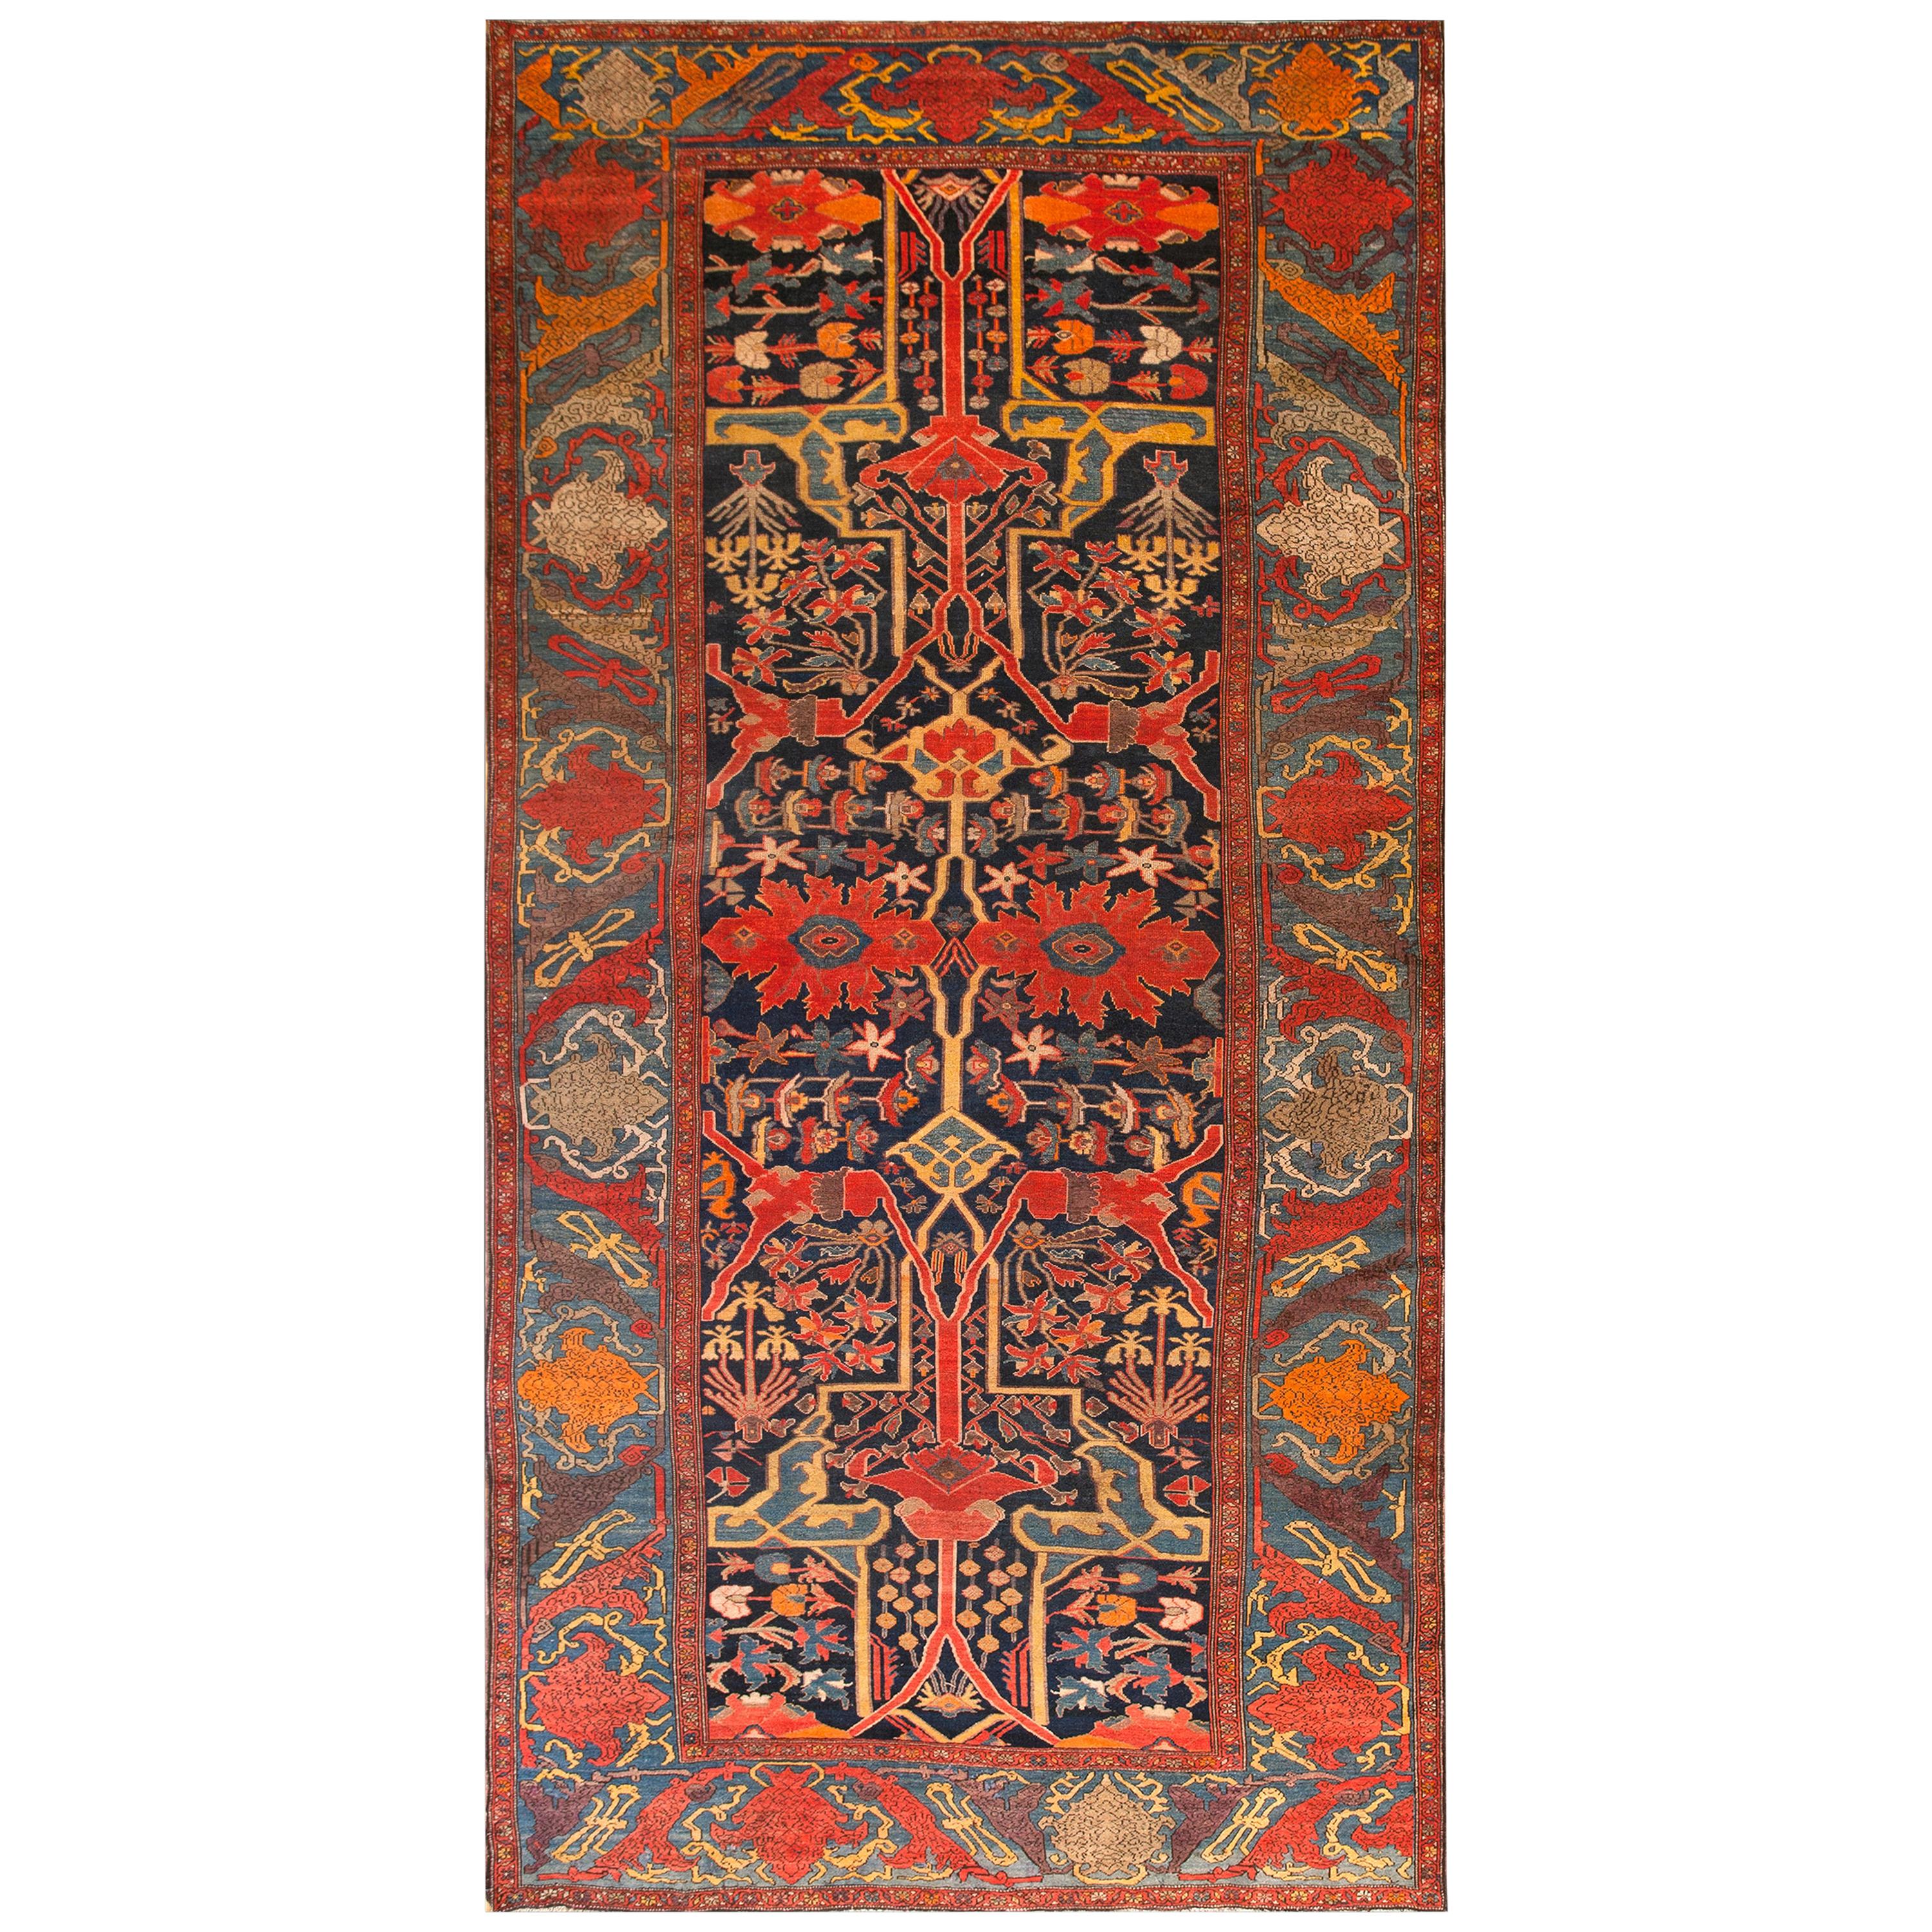 Late 19th Century Persian Malayer Carpet ( 7' x 13'10" - 214 x 422 )